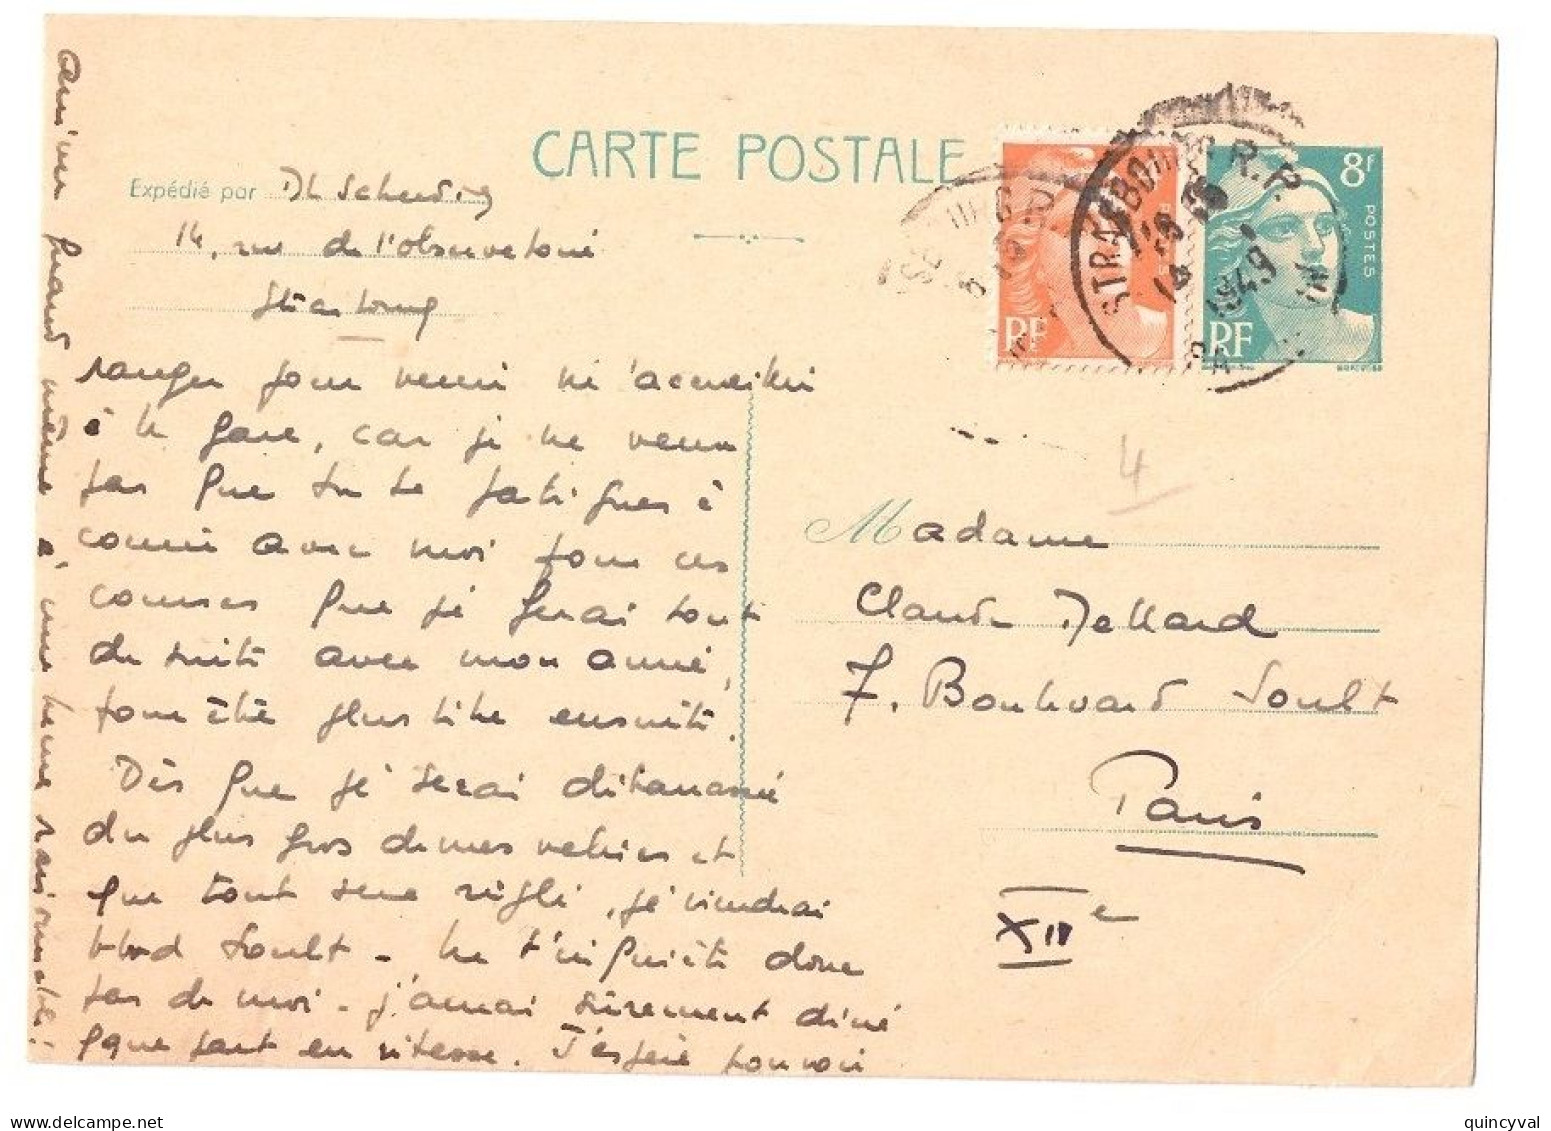 STRASBOURG RP Carte Postale Entier 8F Gandon Turquoise Complément 4 F Ob 14 1 1949 Yv 808 810-CP1 - Standard Postcards & Stamped On Demand (before 1995)